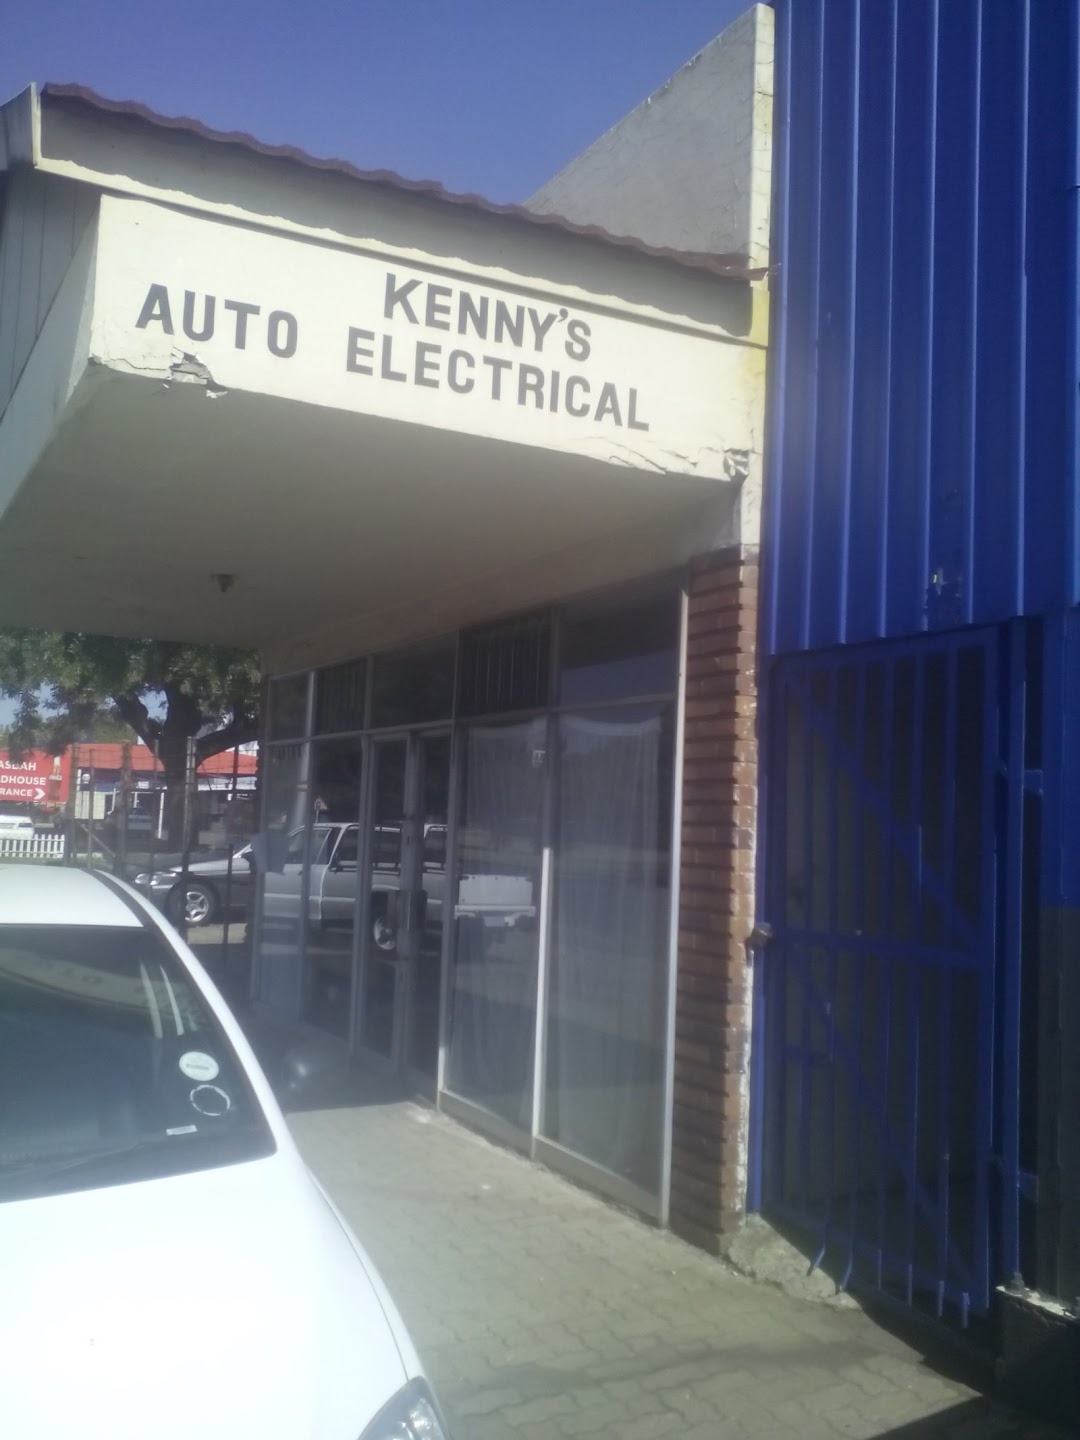 Kennys Auto Electrical